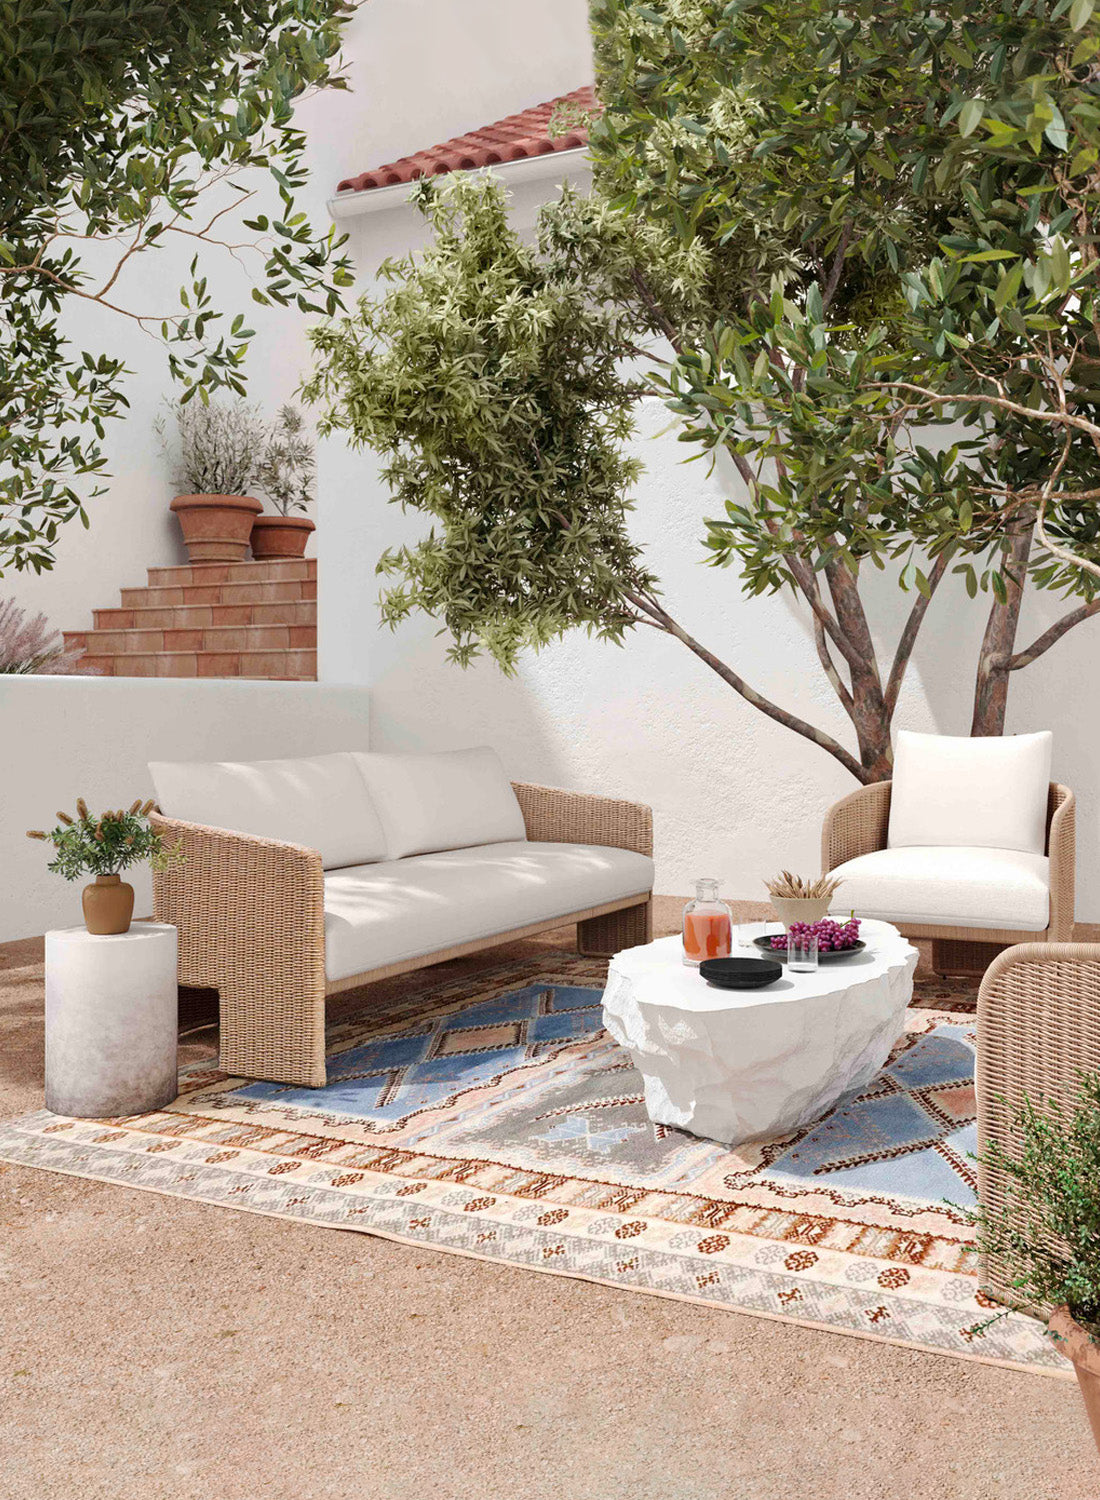 Luxe Almond Outdoor Armchair